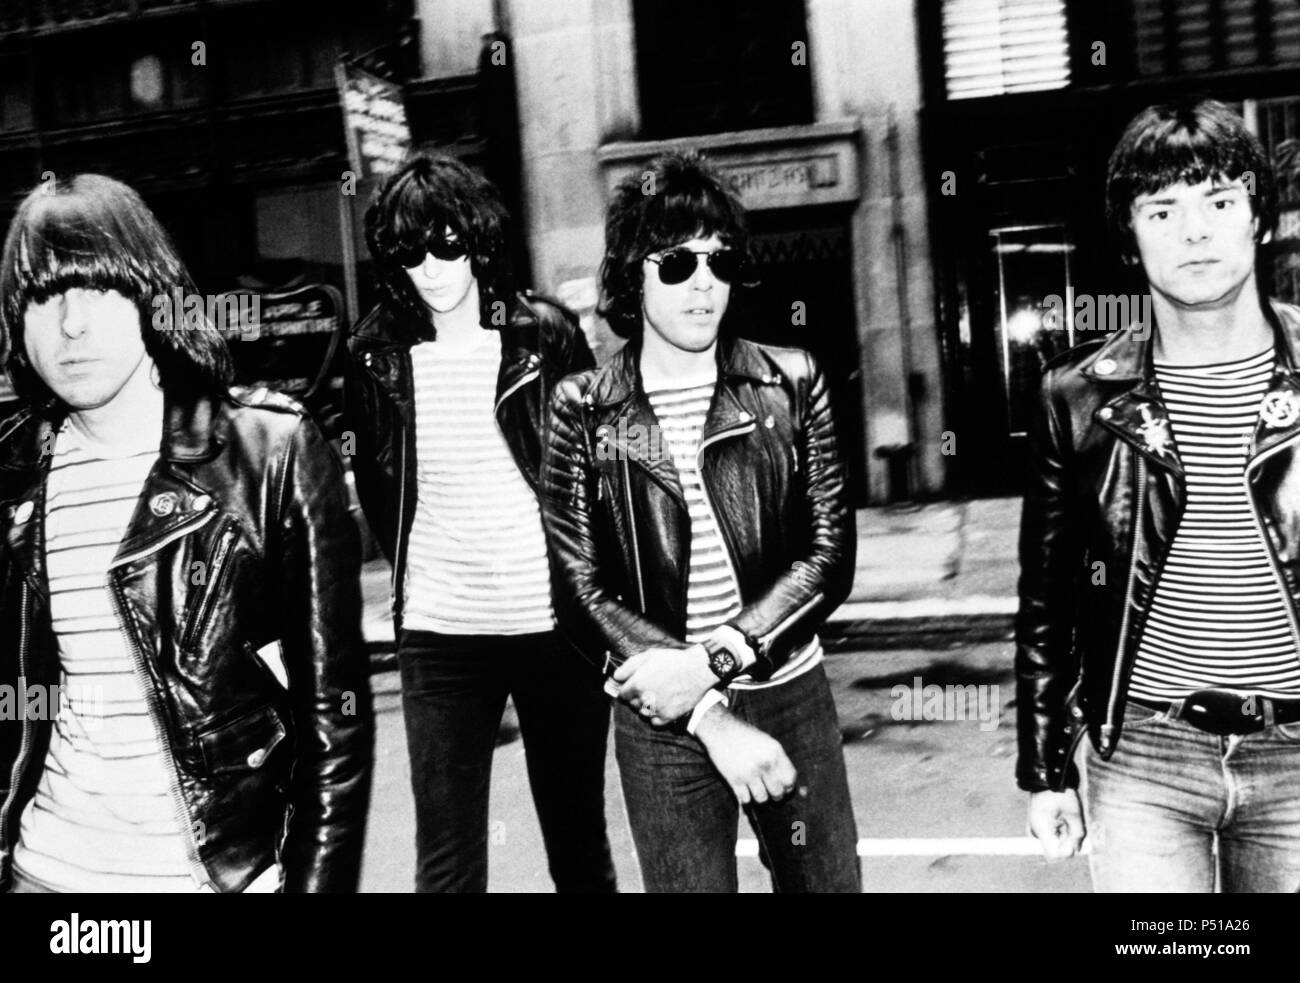 La banda norteamericana Ramones. Stock Photo